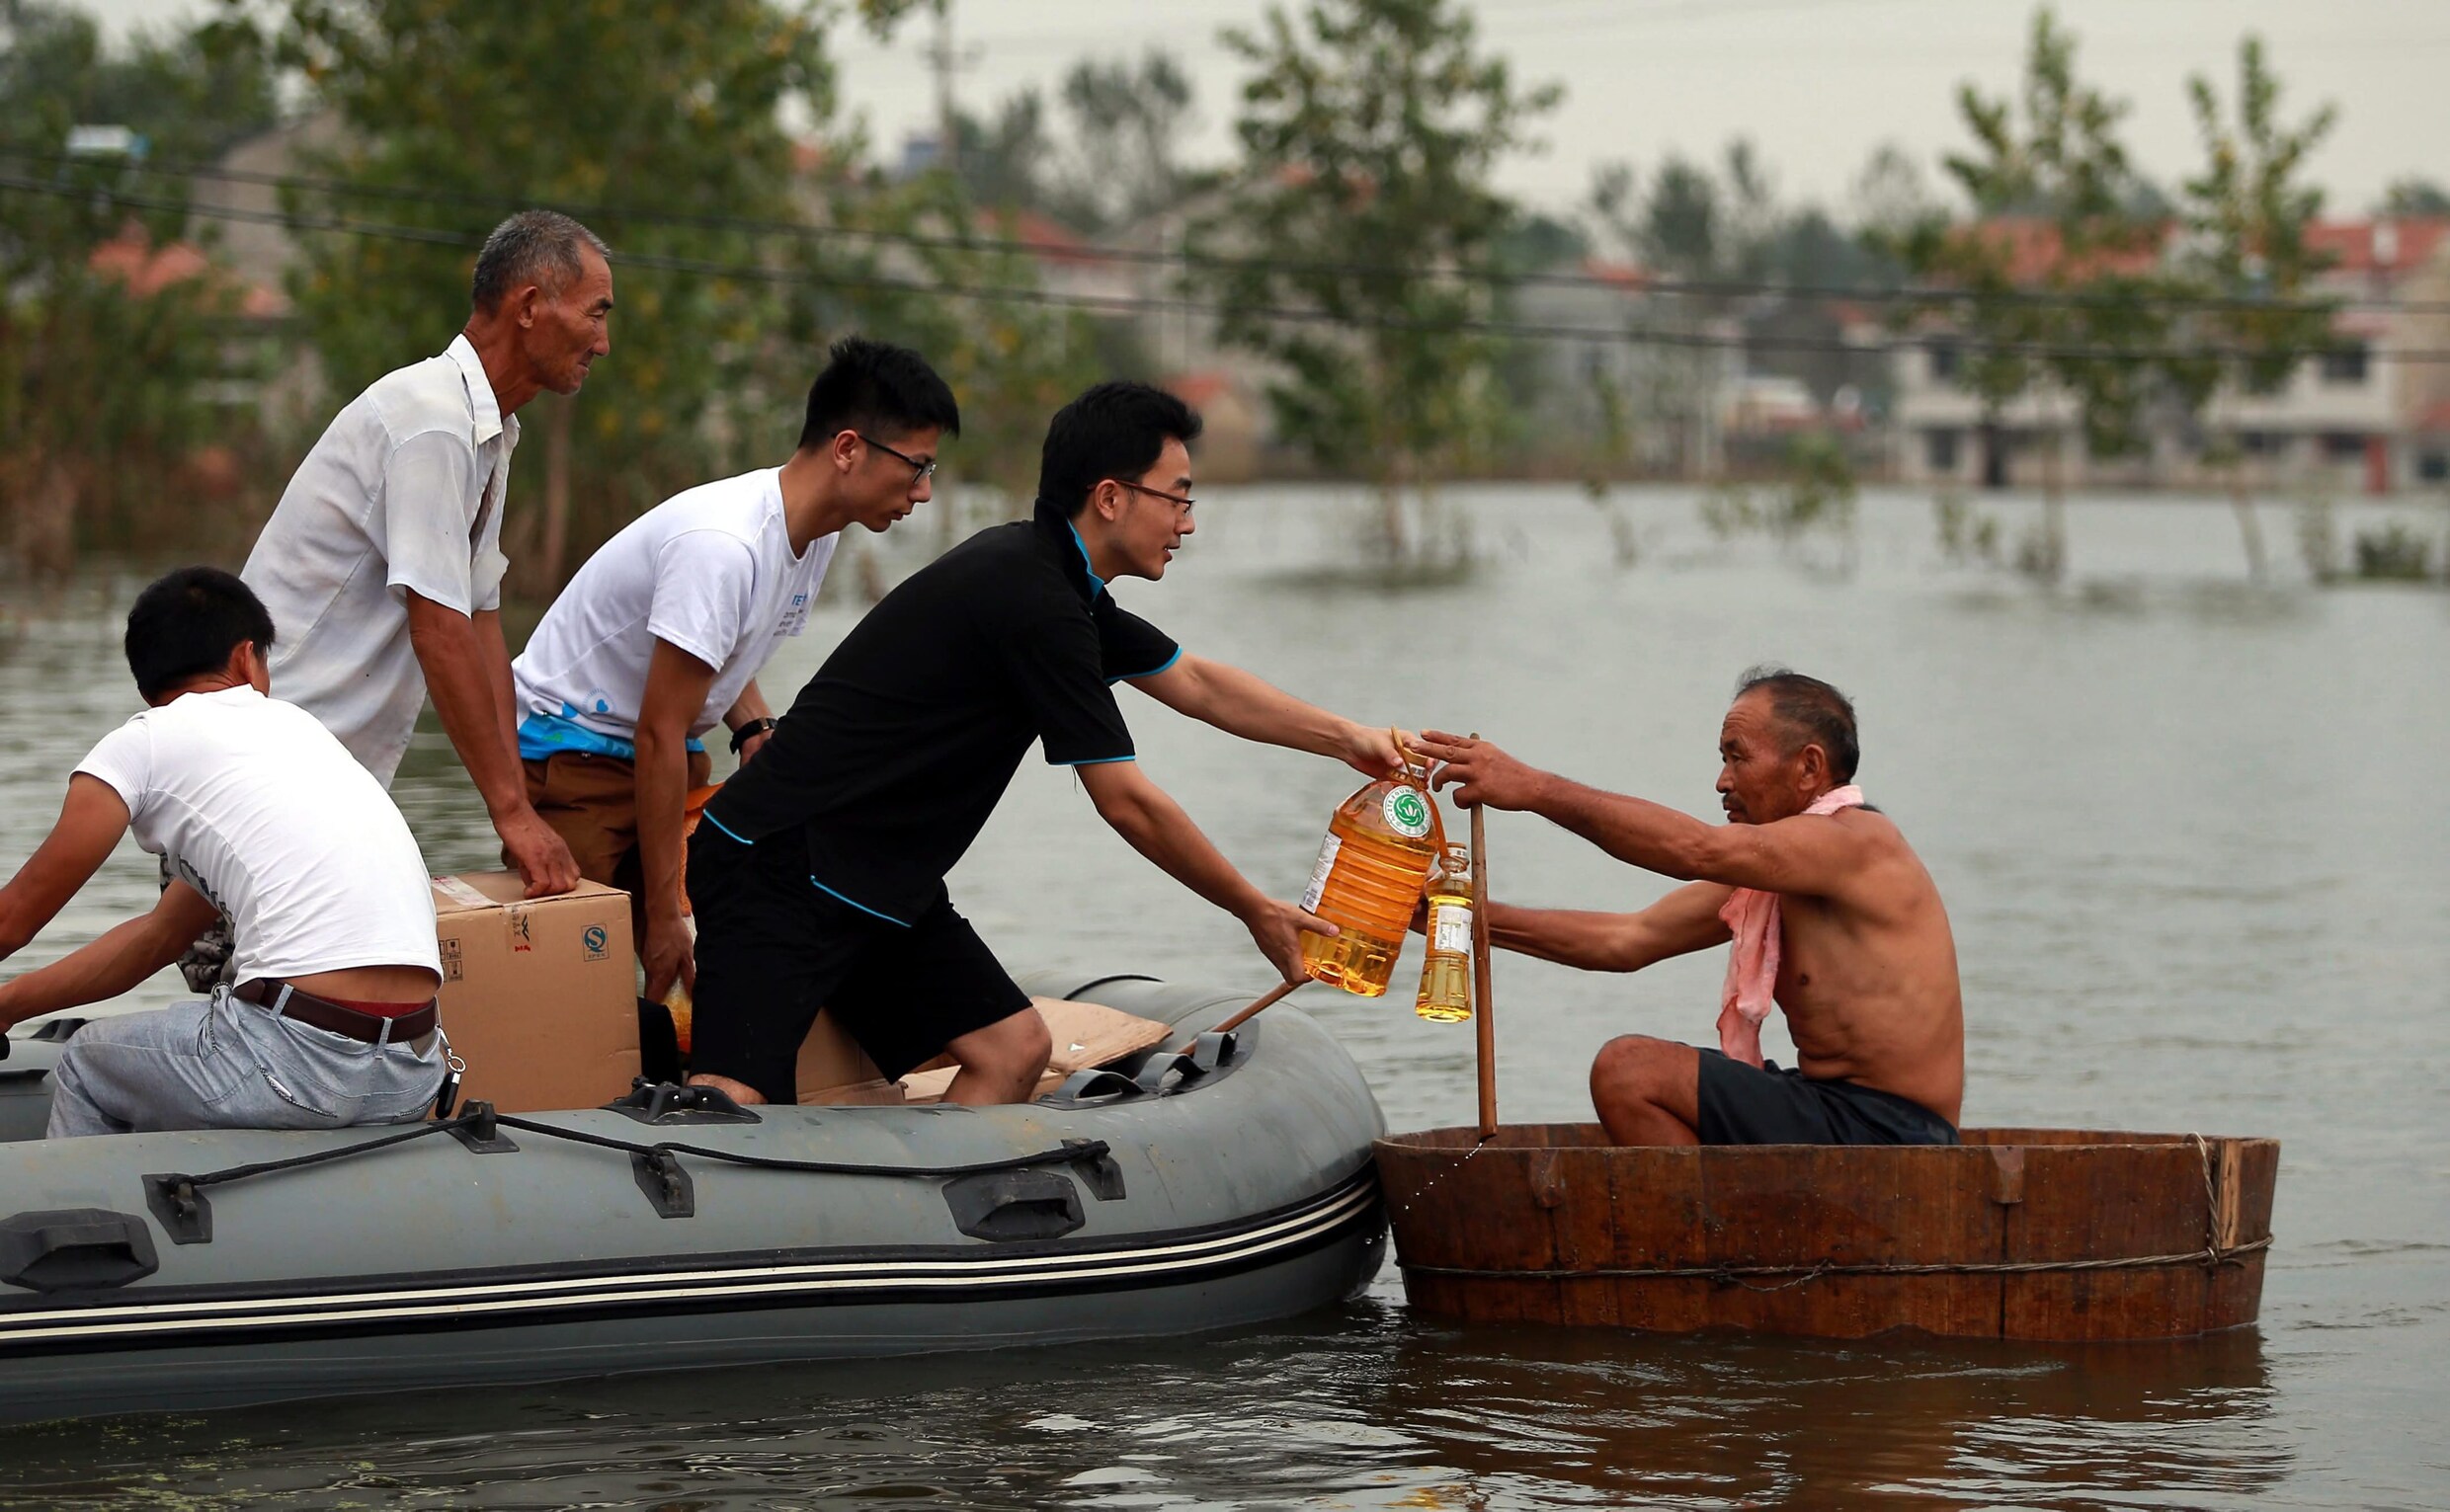 Overstromingen in China eisen nu al 114 doden